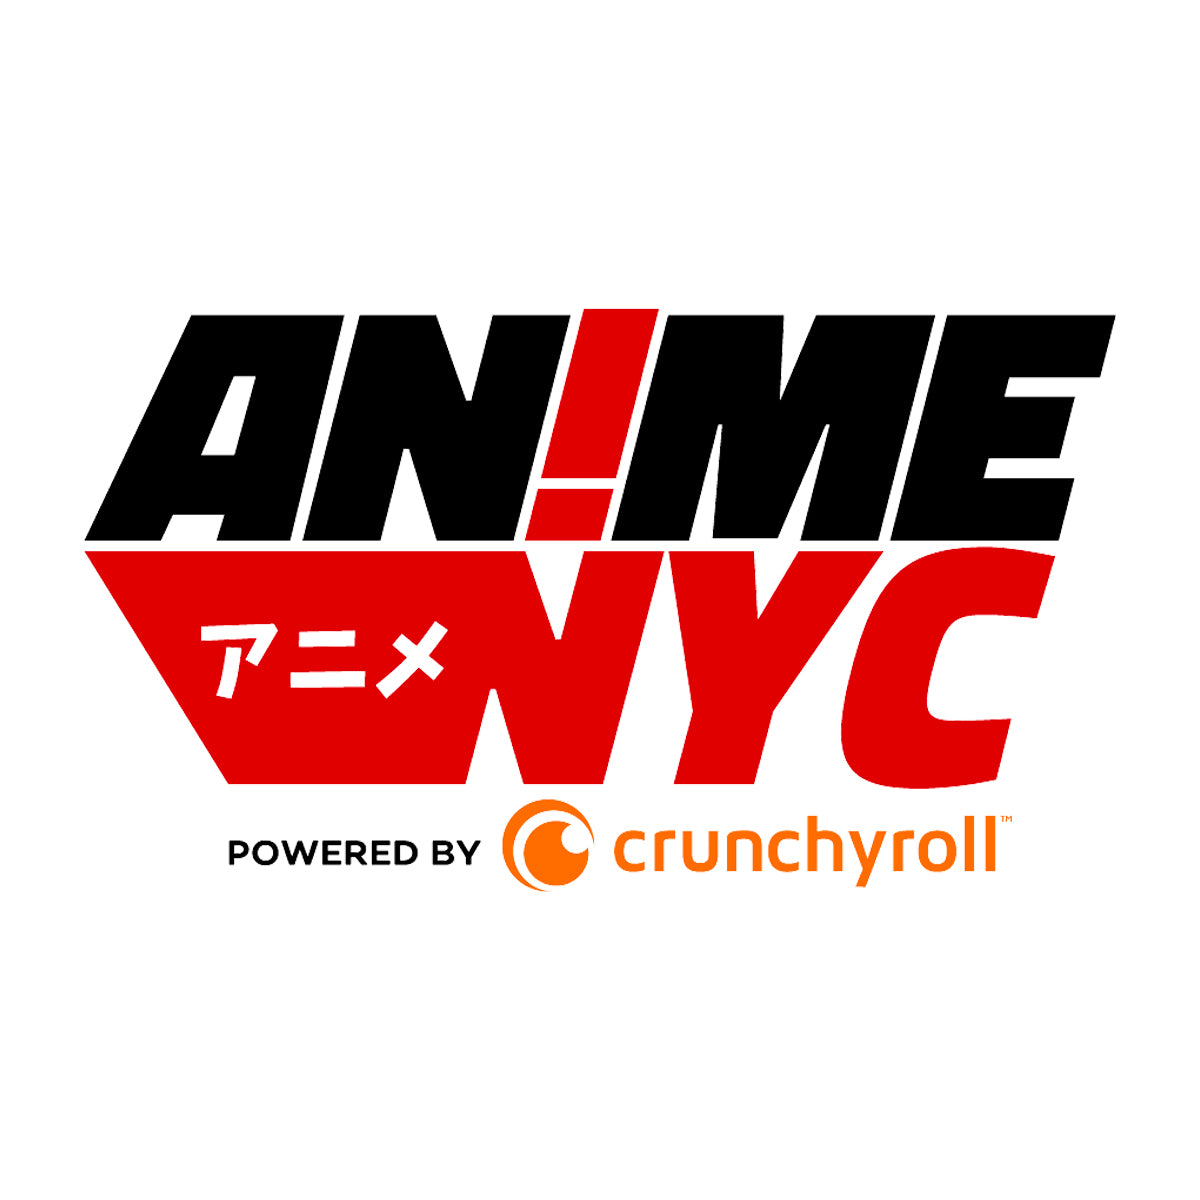 Anime NYC